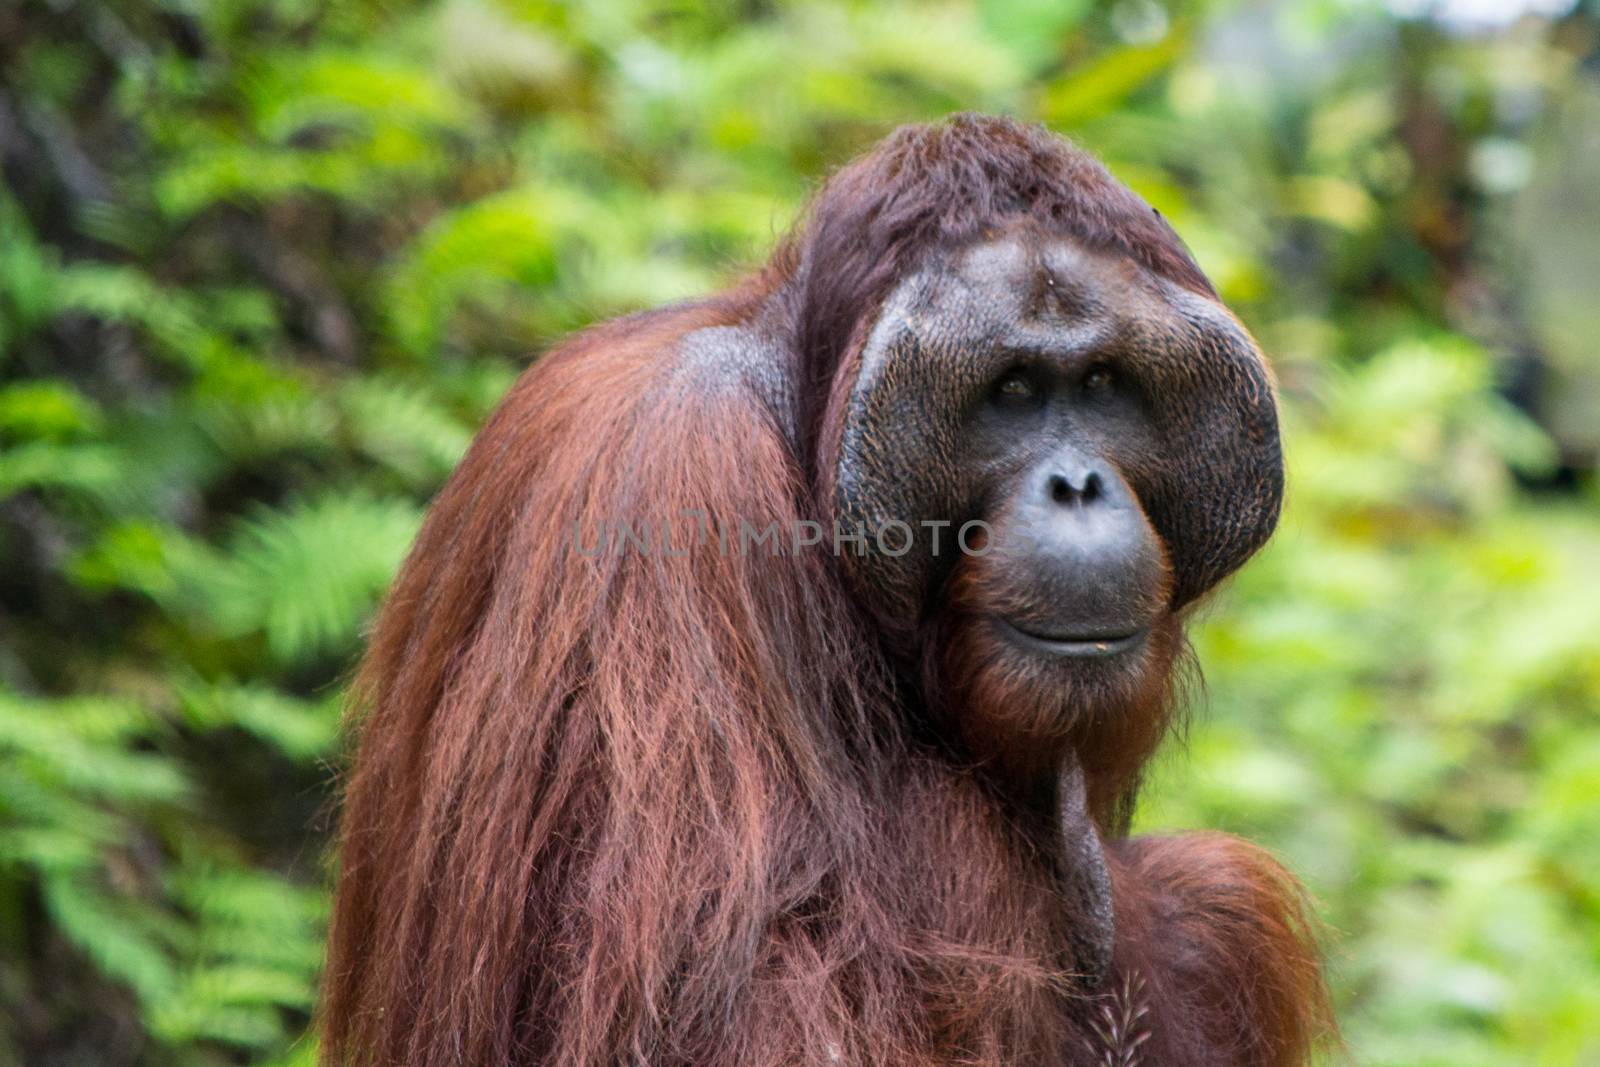 Orangutan, adult male, close-up of face and hair in the nature of Borneo, Malaysia (Sarawak Kuching region). Animal Wildlife.